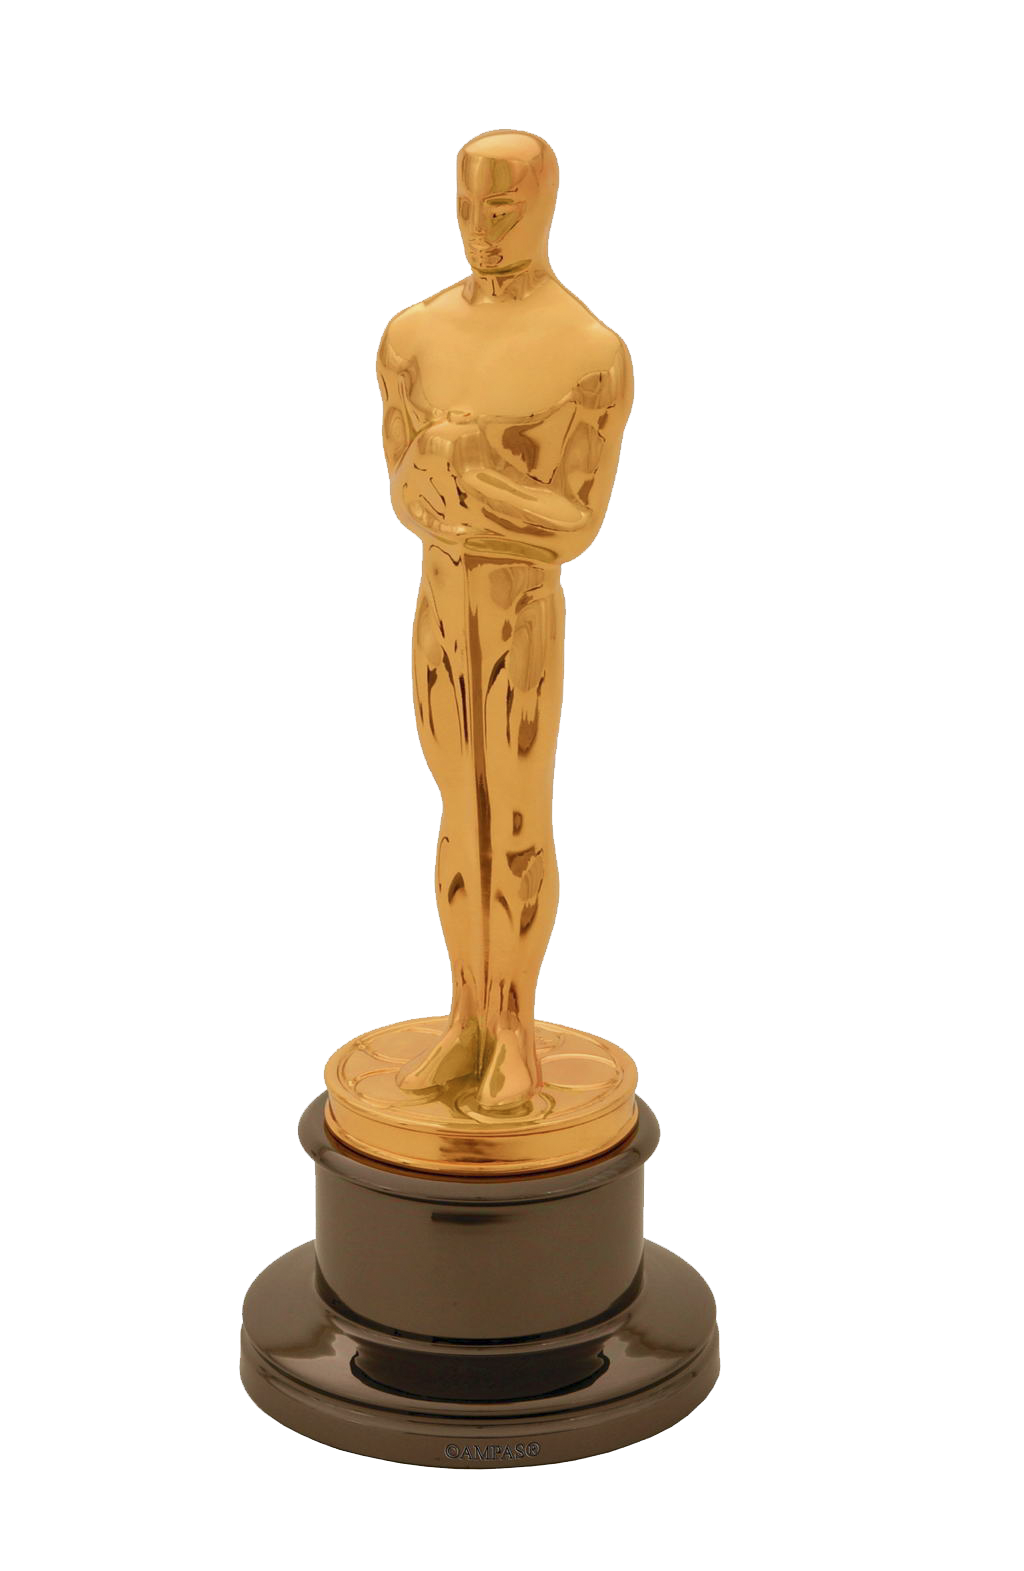 Hadiah Oscar